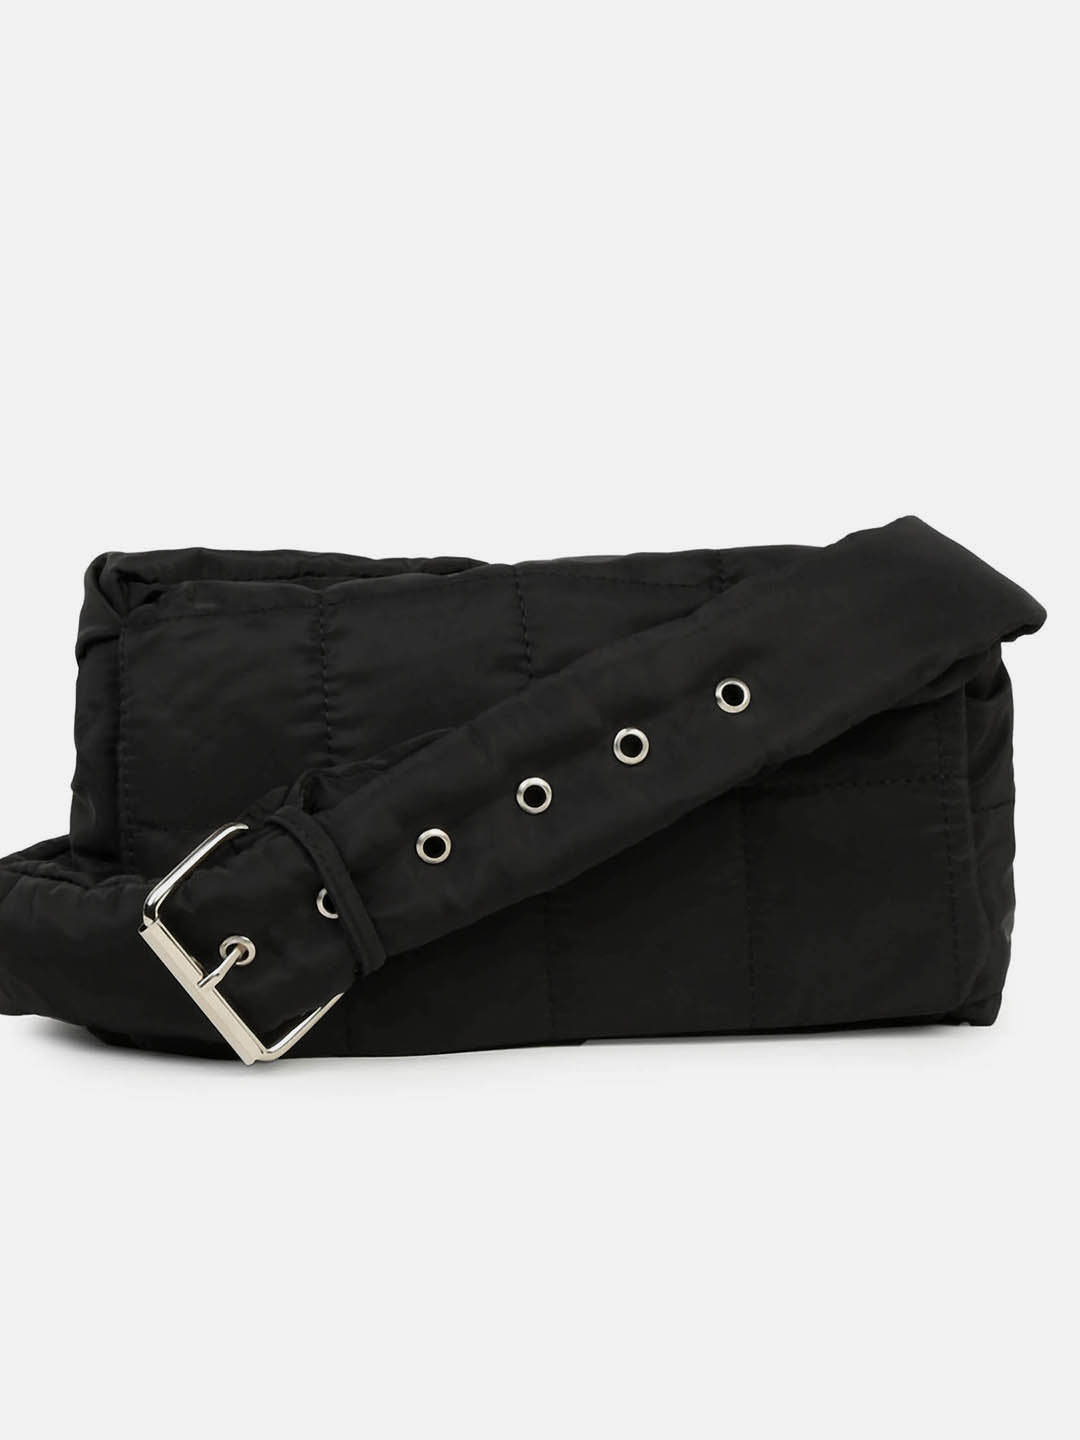 Charcoal Charm Black Handbag